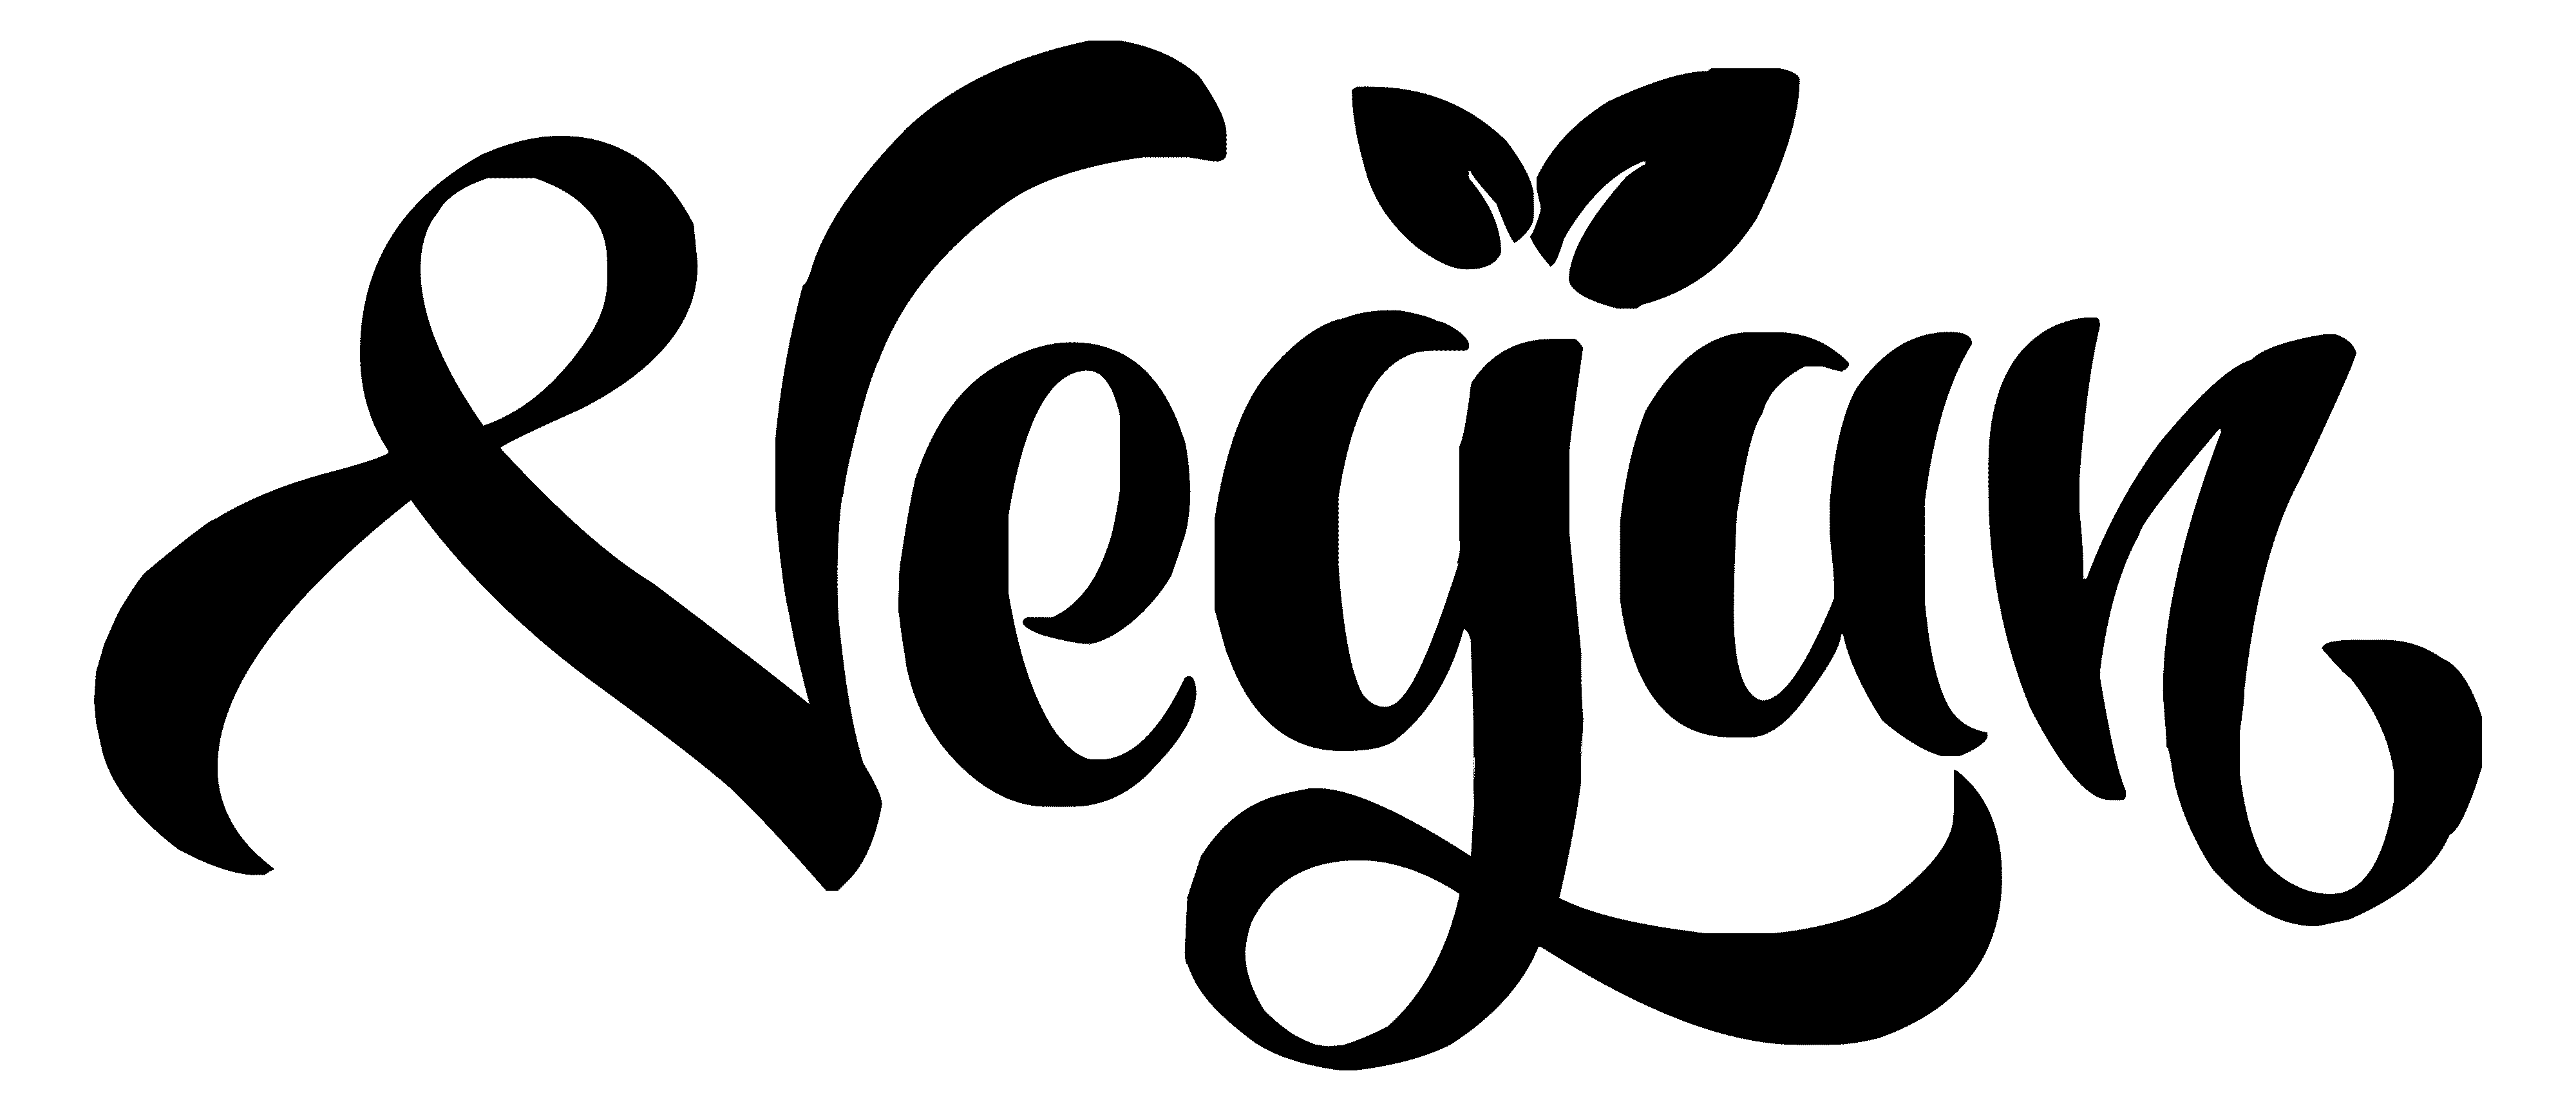 Vegan Company Logo - Company Logos Clipart vegan Free Clip Art stock illustrations